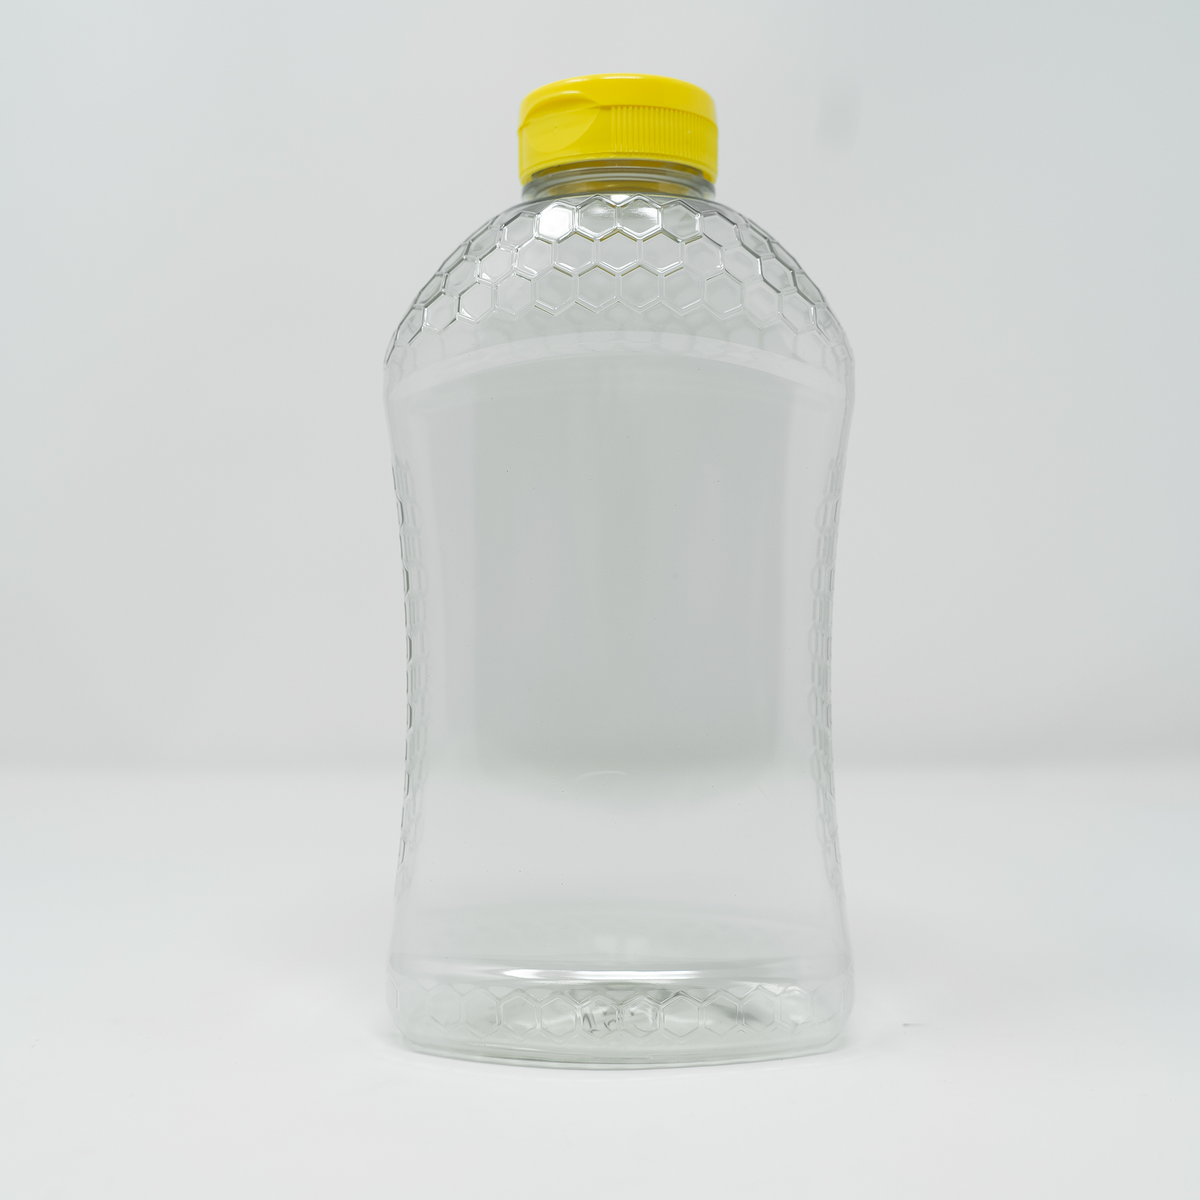 2 lb Honeycomb Bottles - 159 Case